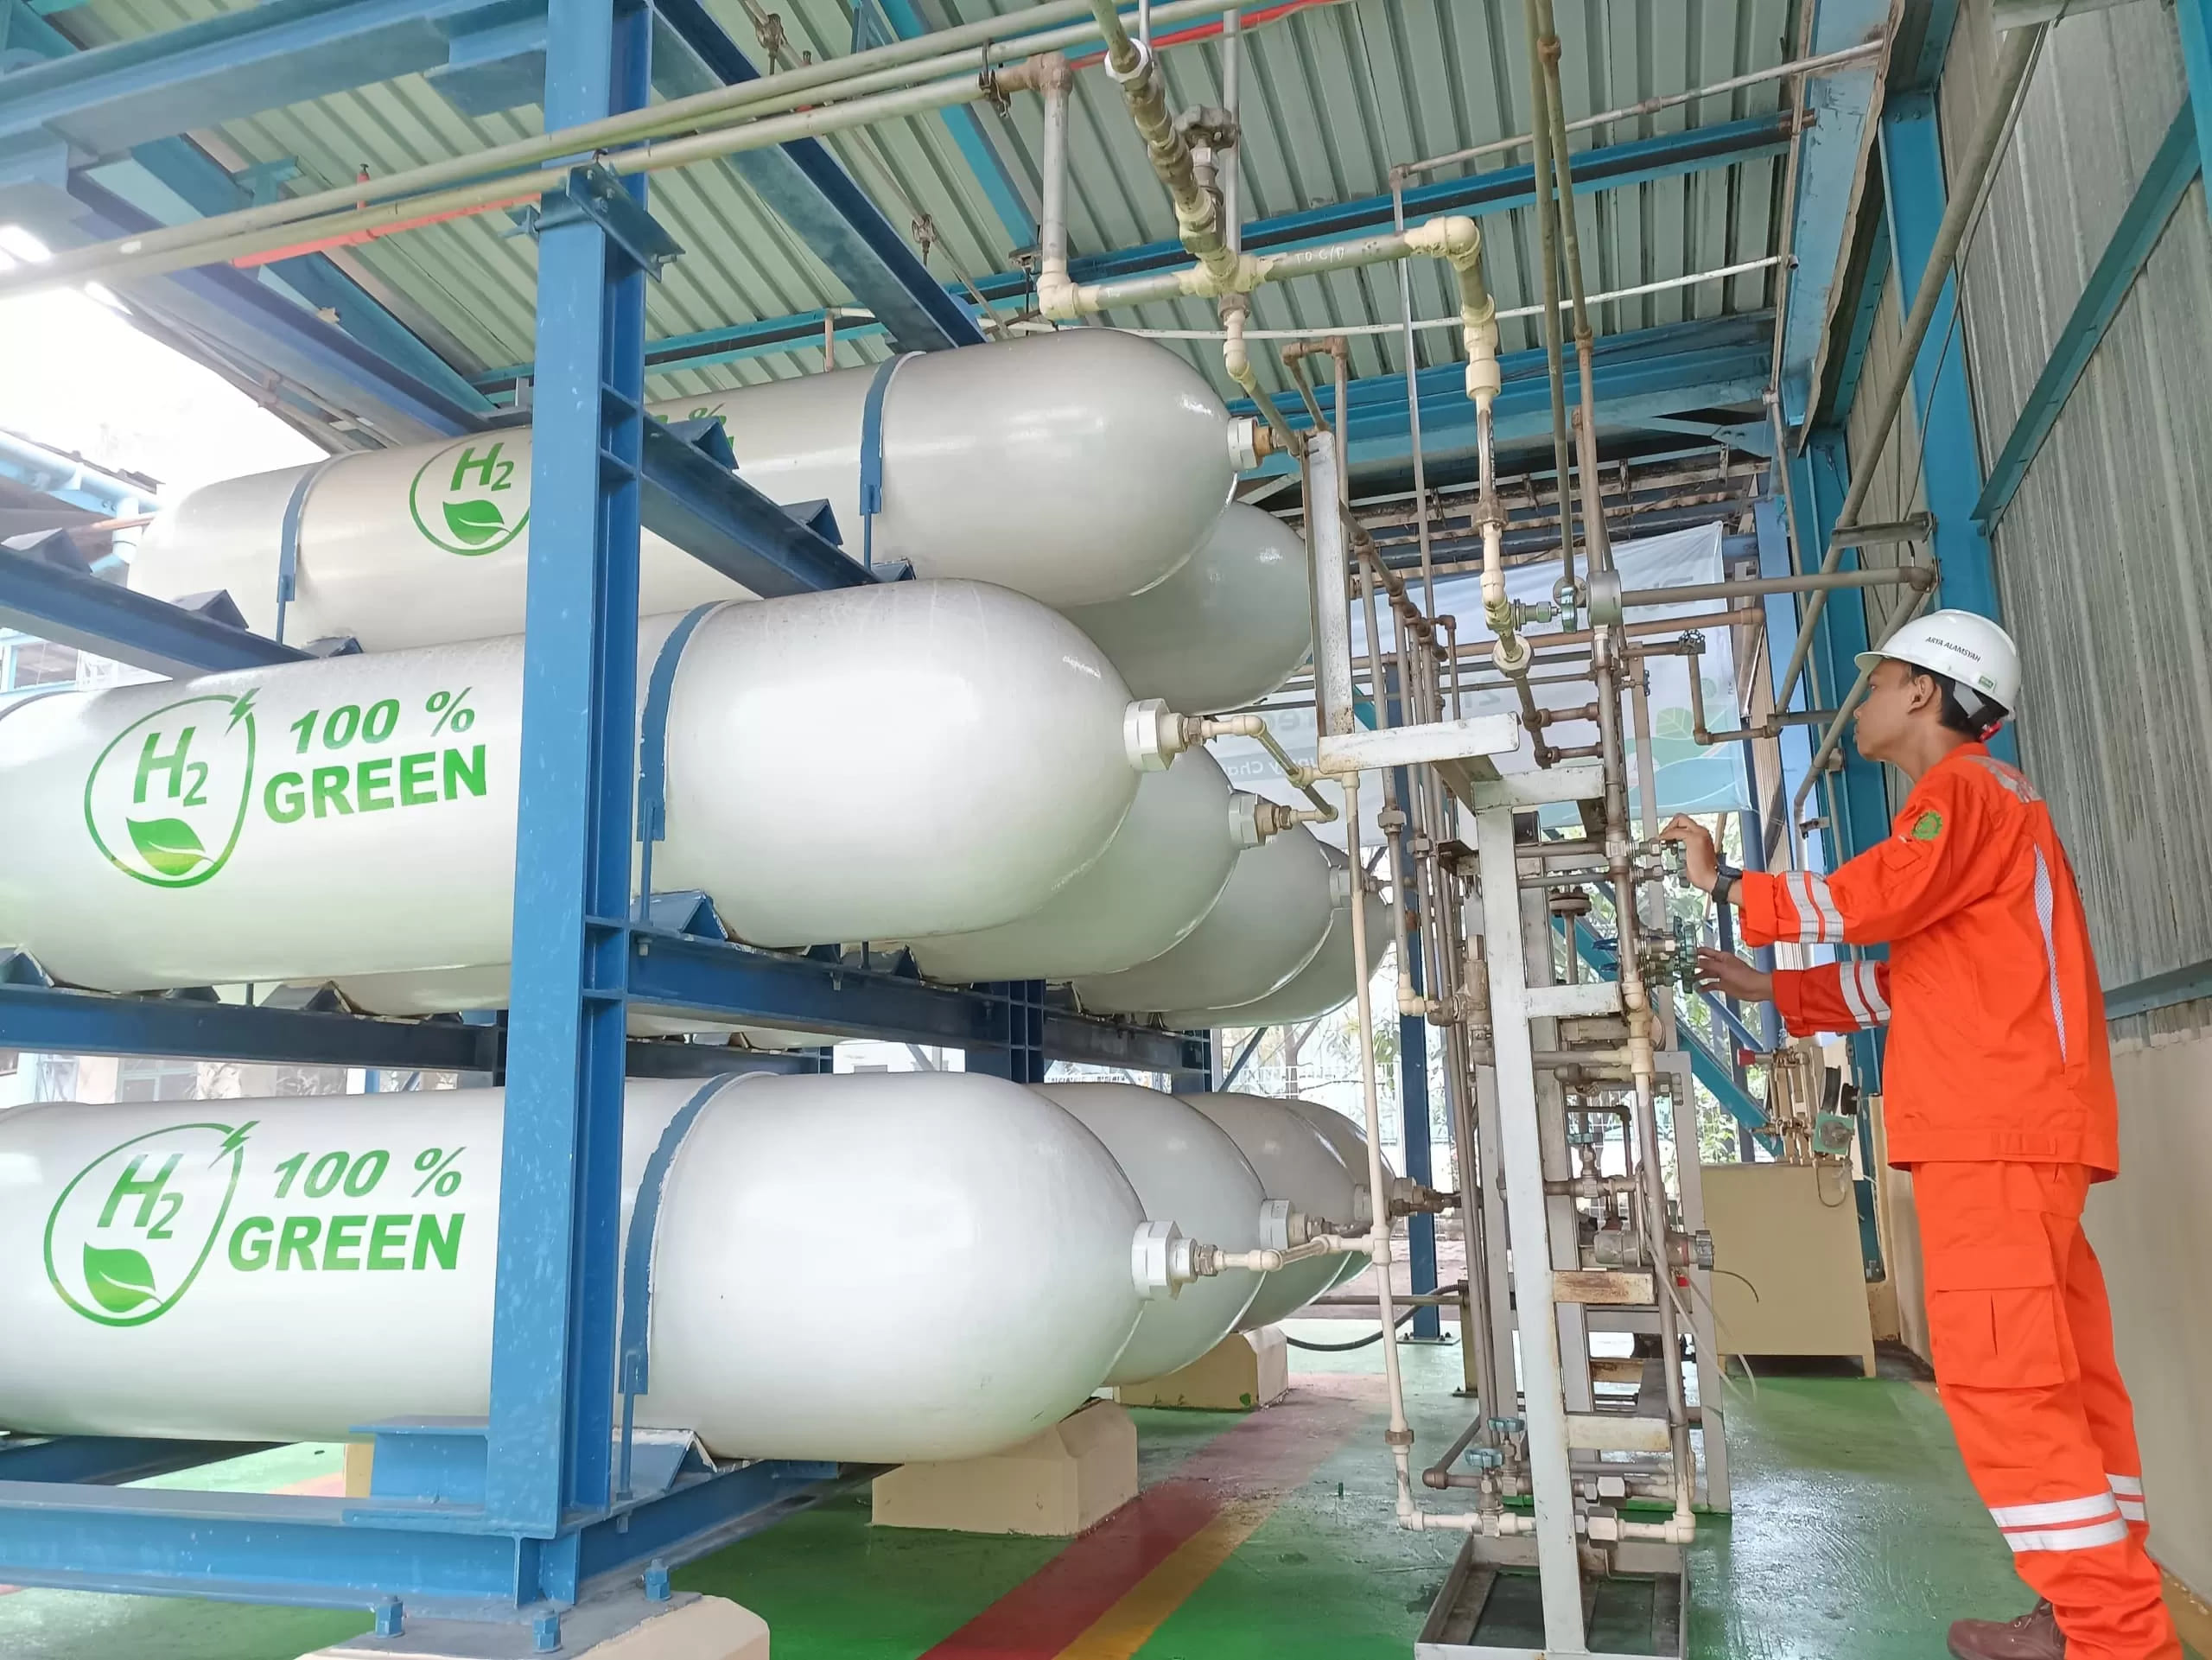 Petugas PLN Indonesia Power sedang melakukan pengecekan di Green Hydrogen Plant (GHP) yang berlokasi di pembangkit listrik tenaga uap (PLTU) Suralaya.